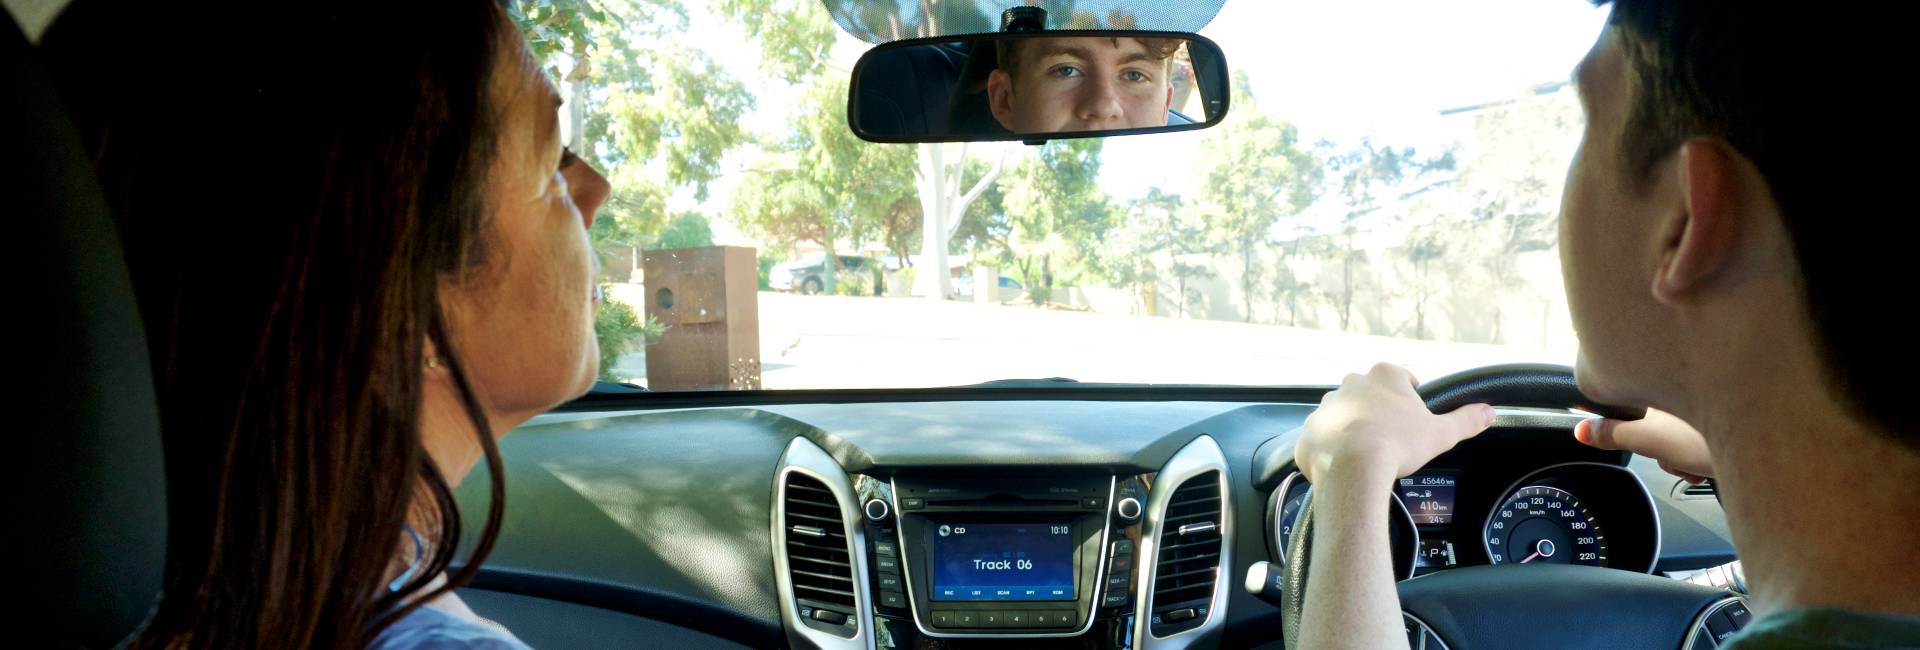 Parent supervising teen driver